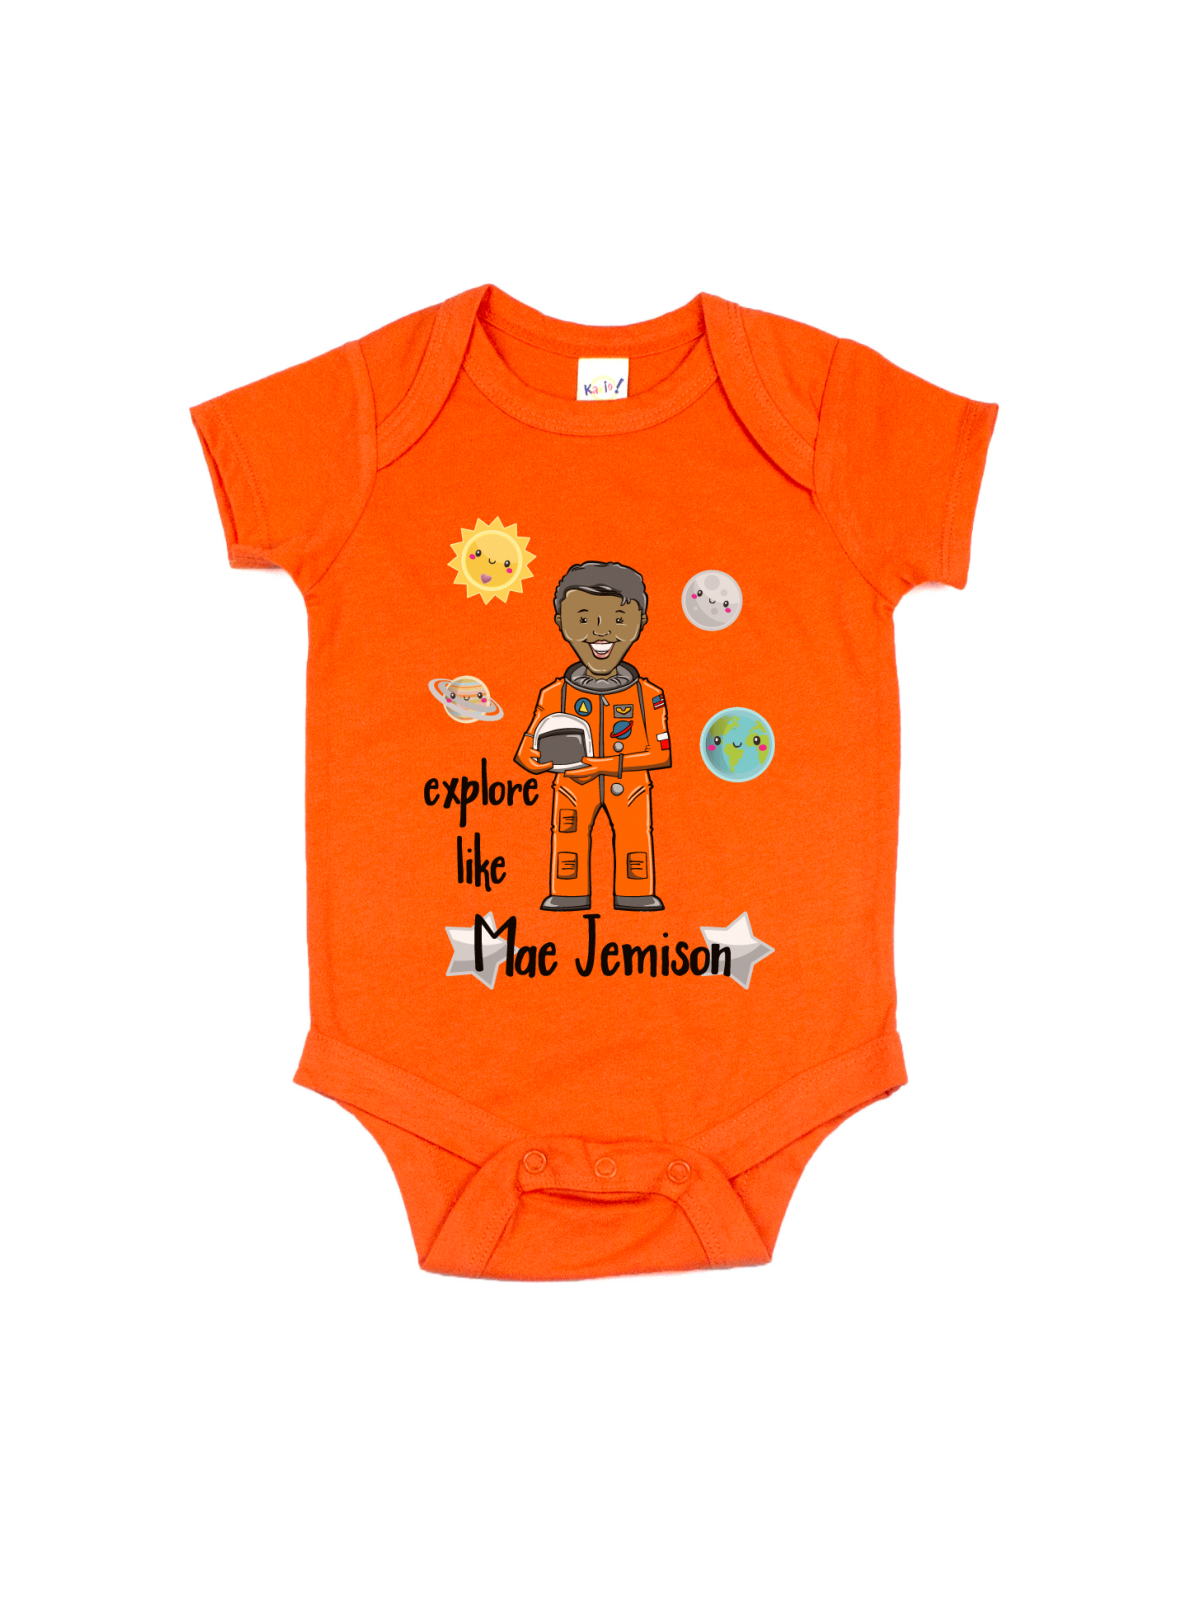 Explore like Mae C Jemison infant bodysuit